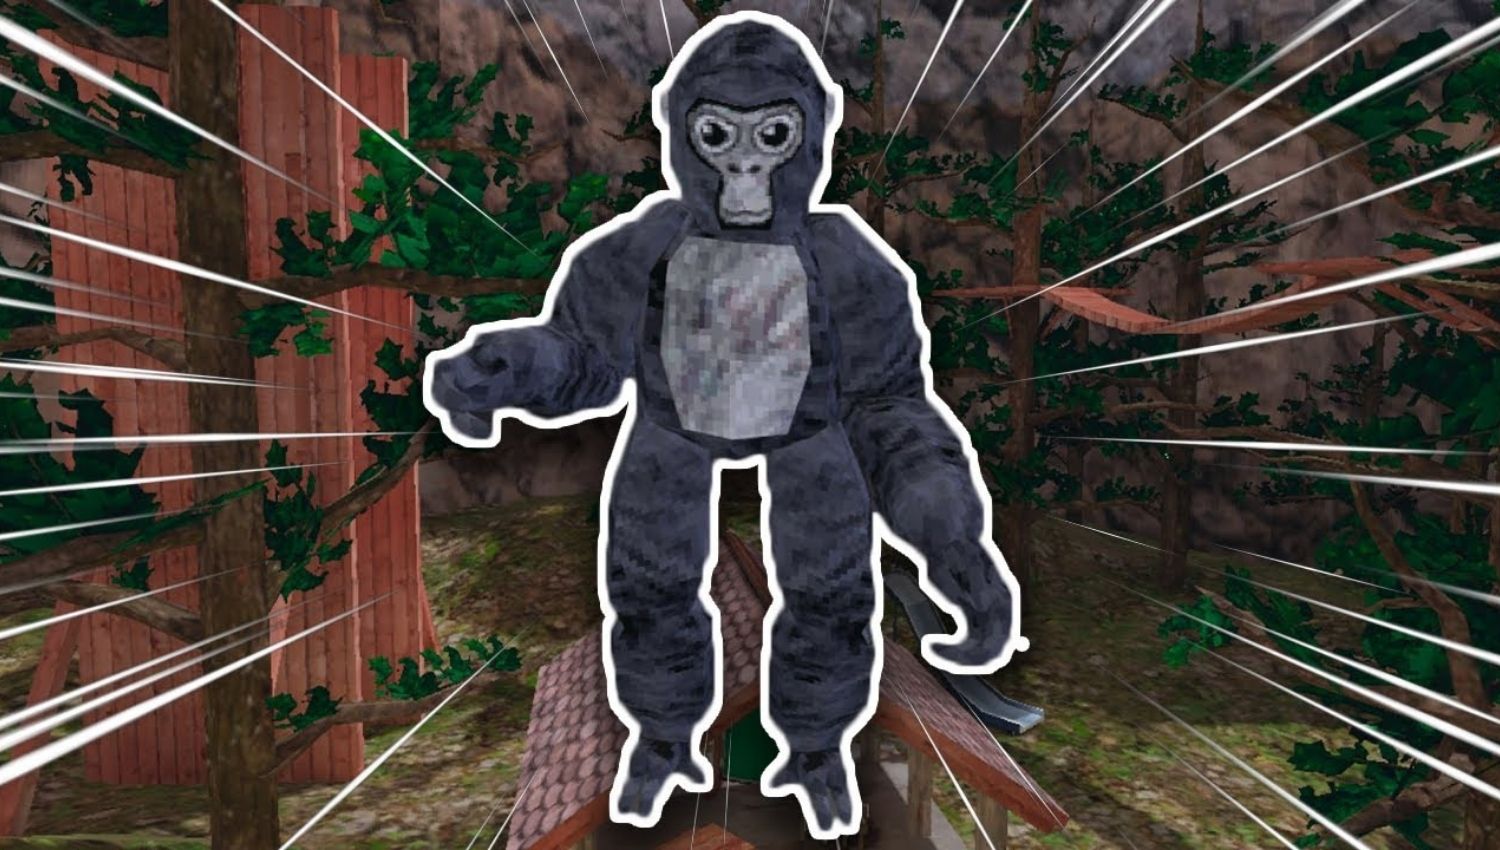 Download Gorilla Tag : game mod Mobile on PC (Emulator) - LDPlayer